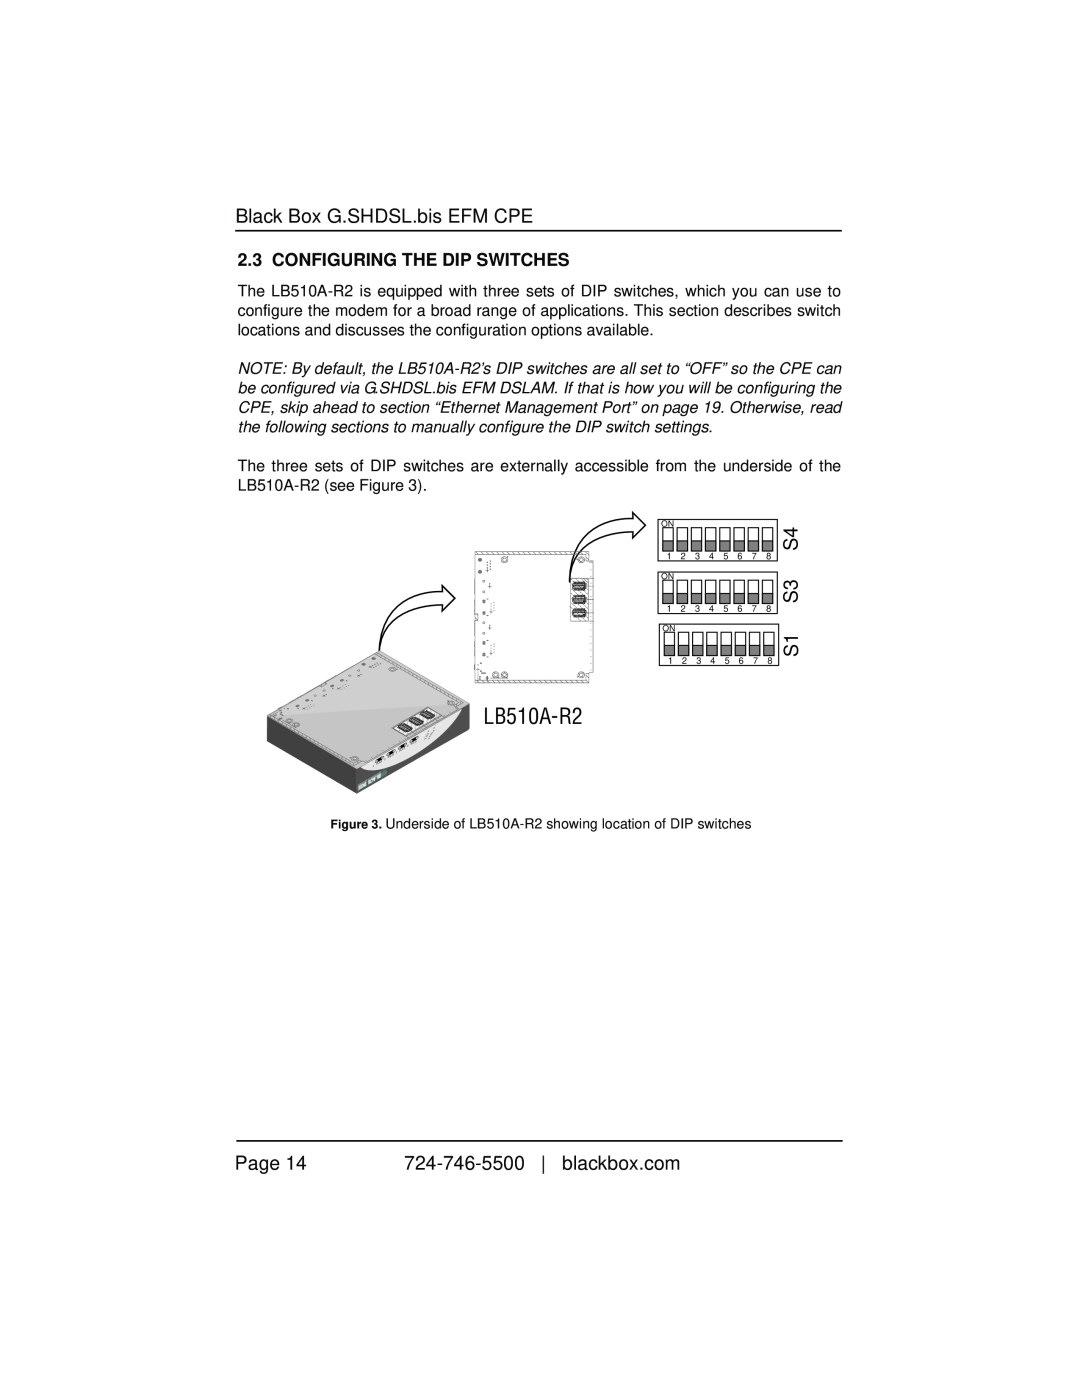 Black Box LB510A-R2 manual Configuring The Dip Switches, Black Box G.SHDSL.bis EFM CPE, Page, blackbox.com 